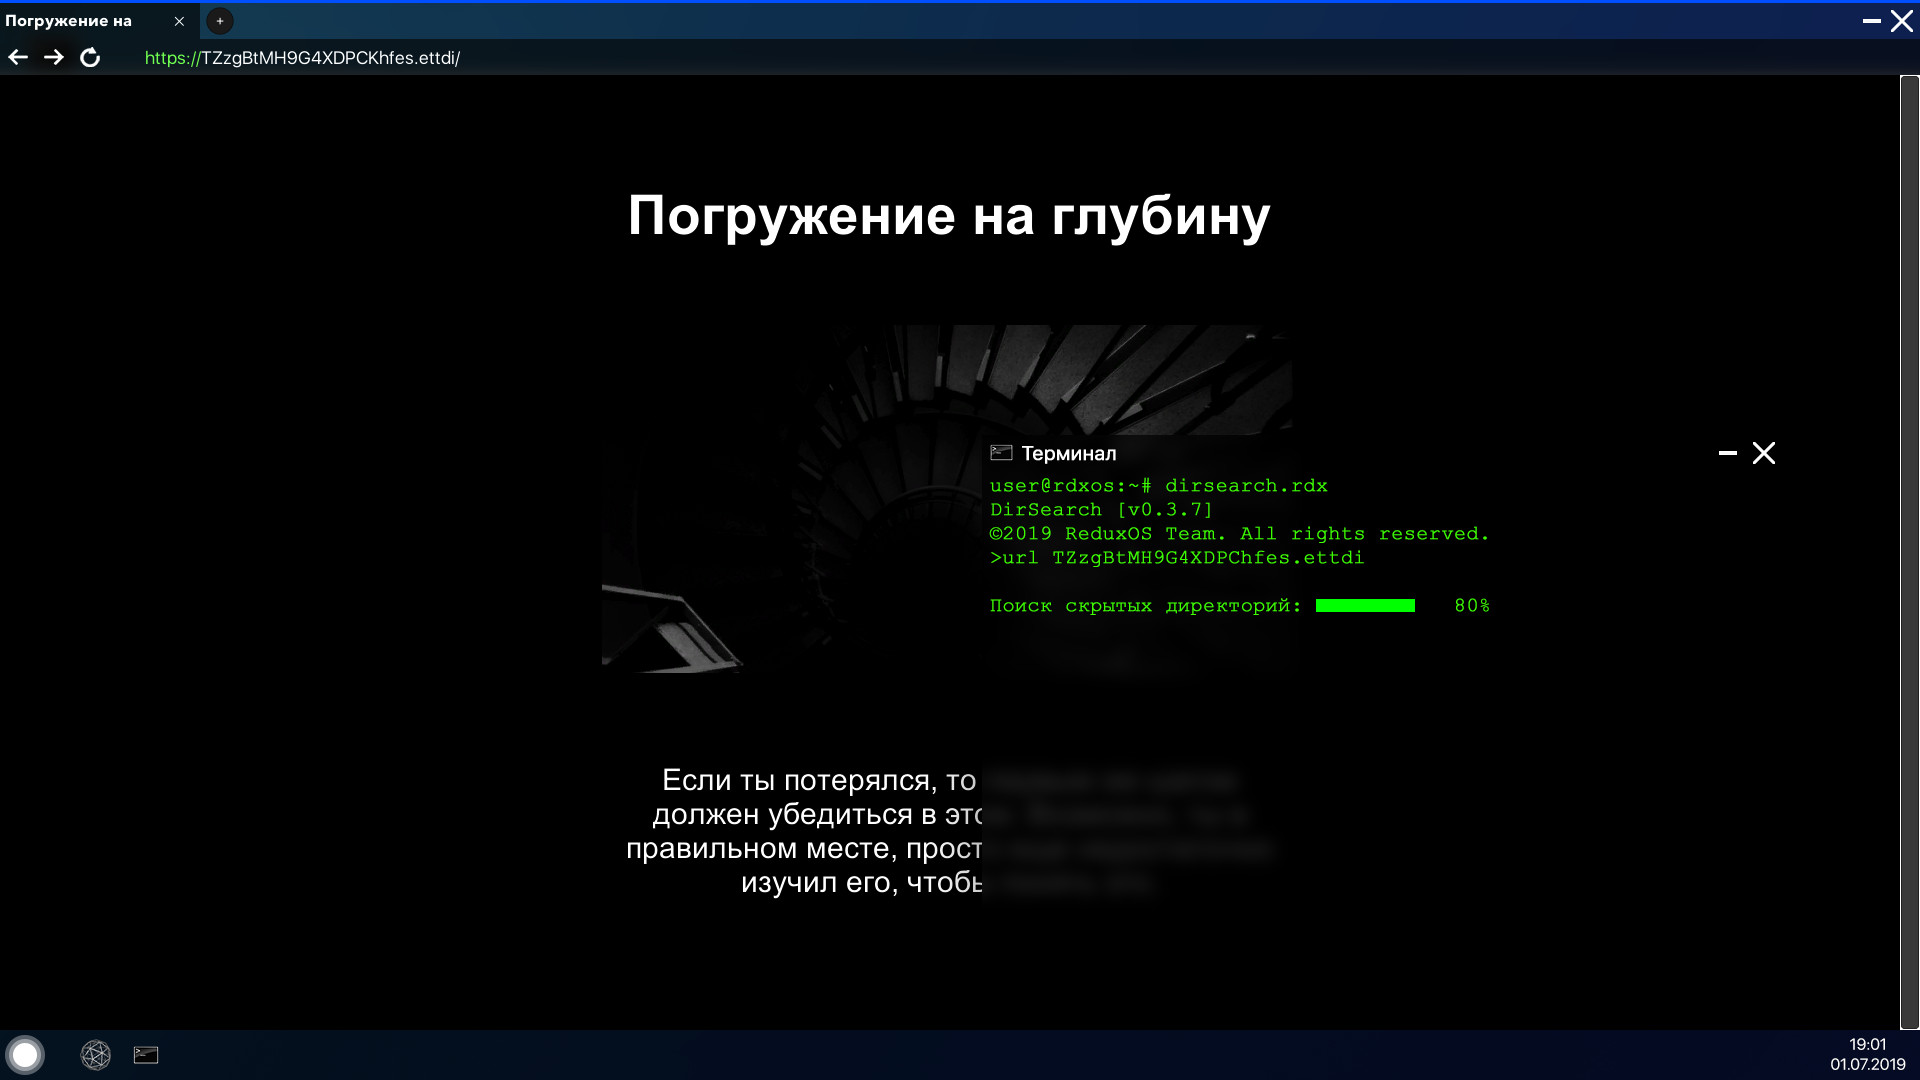 Project DeepWeb screenshot